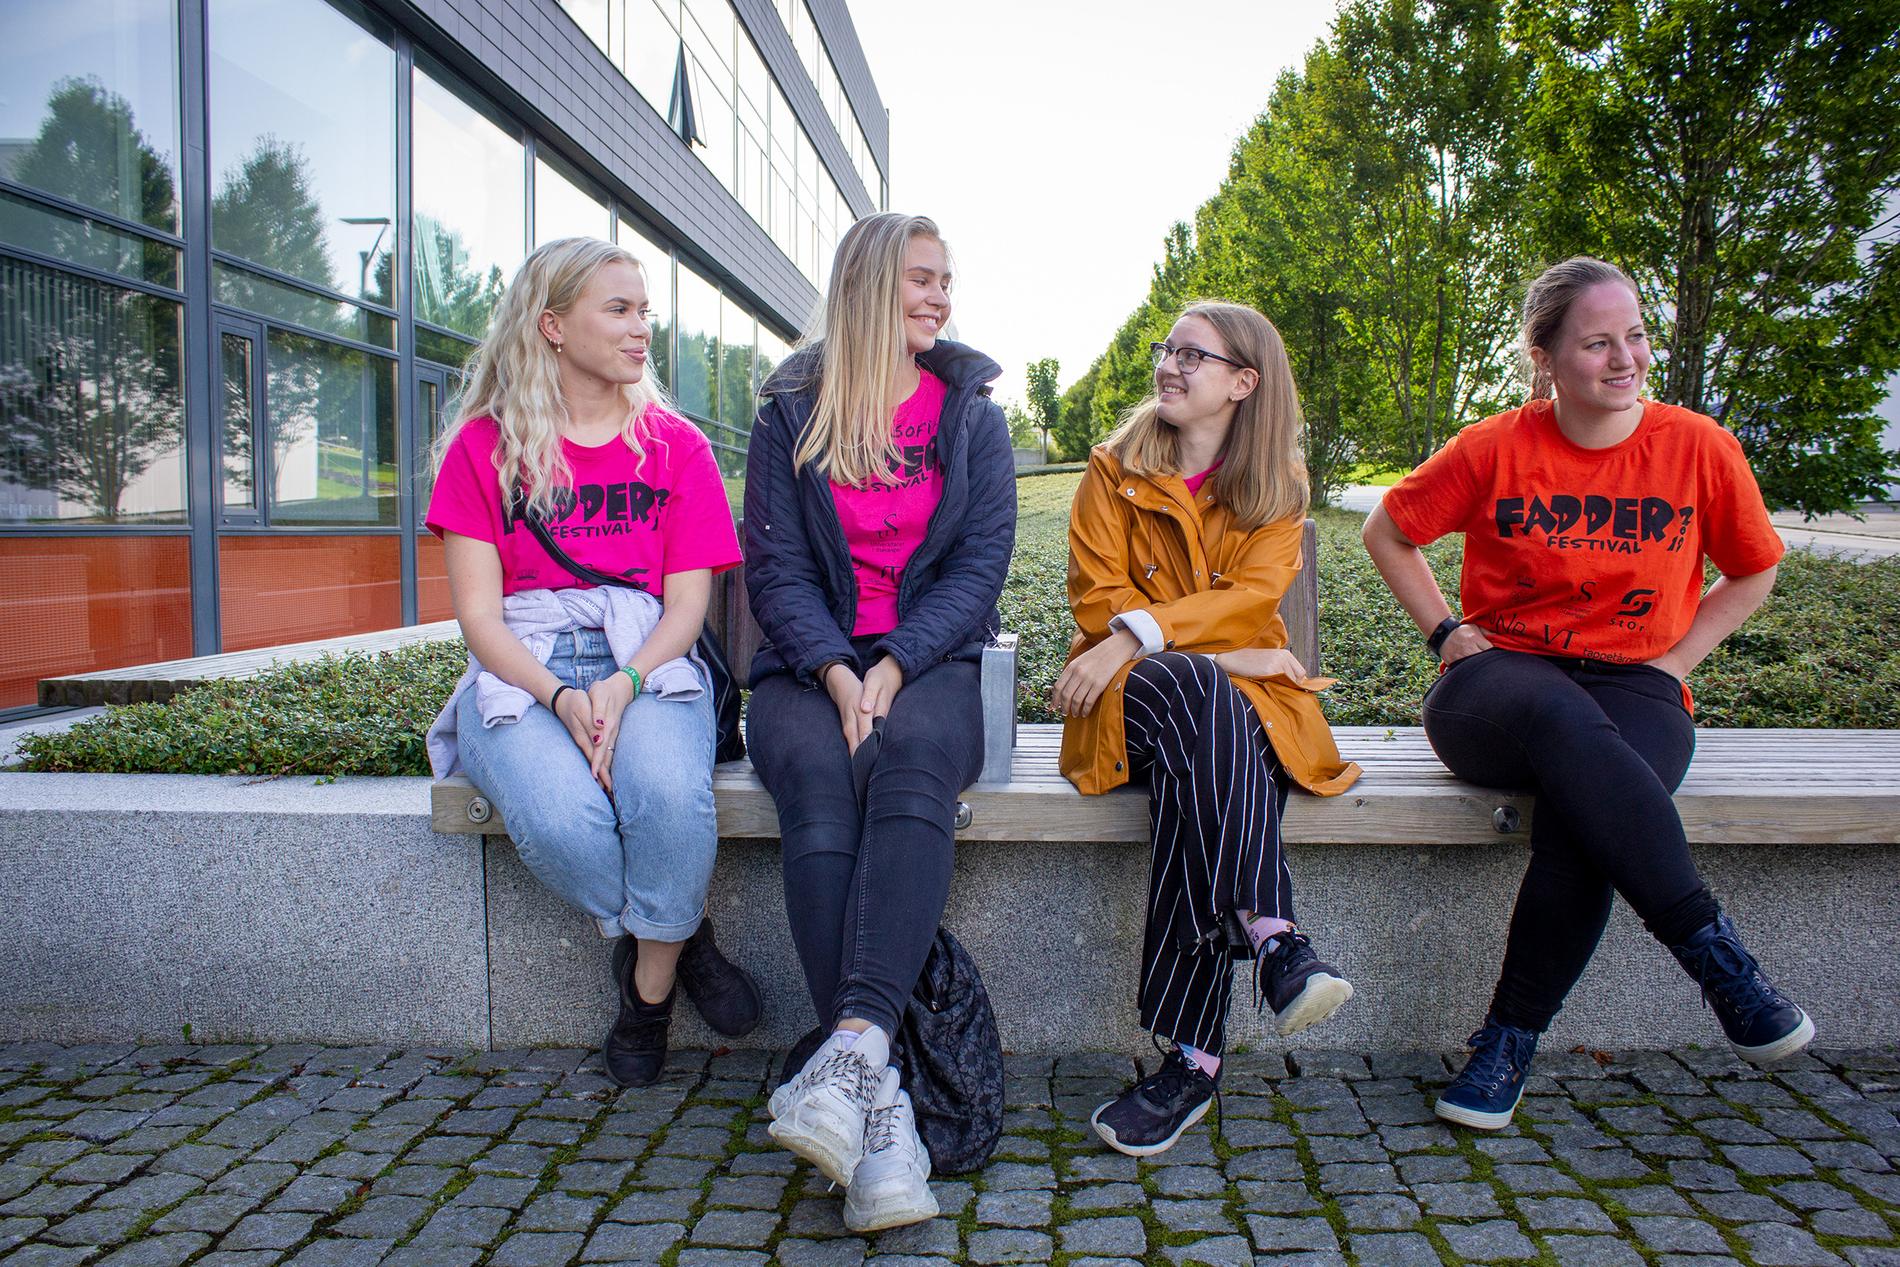 Studentene forteller at de selv kjent på press og stress. Fra venstre: Ingrid Sæterbø, Anne Sofie Lersveen, Anne Aarvik og Anne Haarberg. 